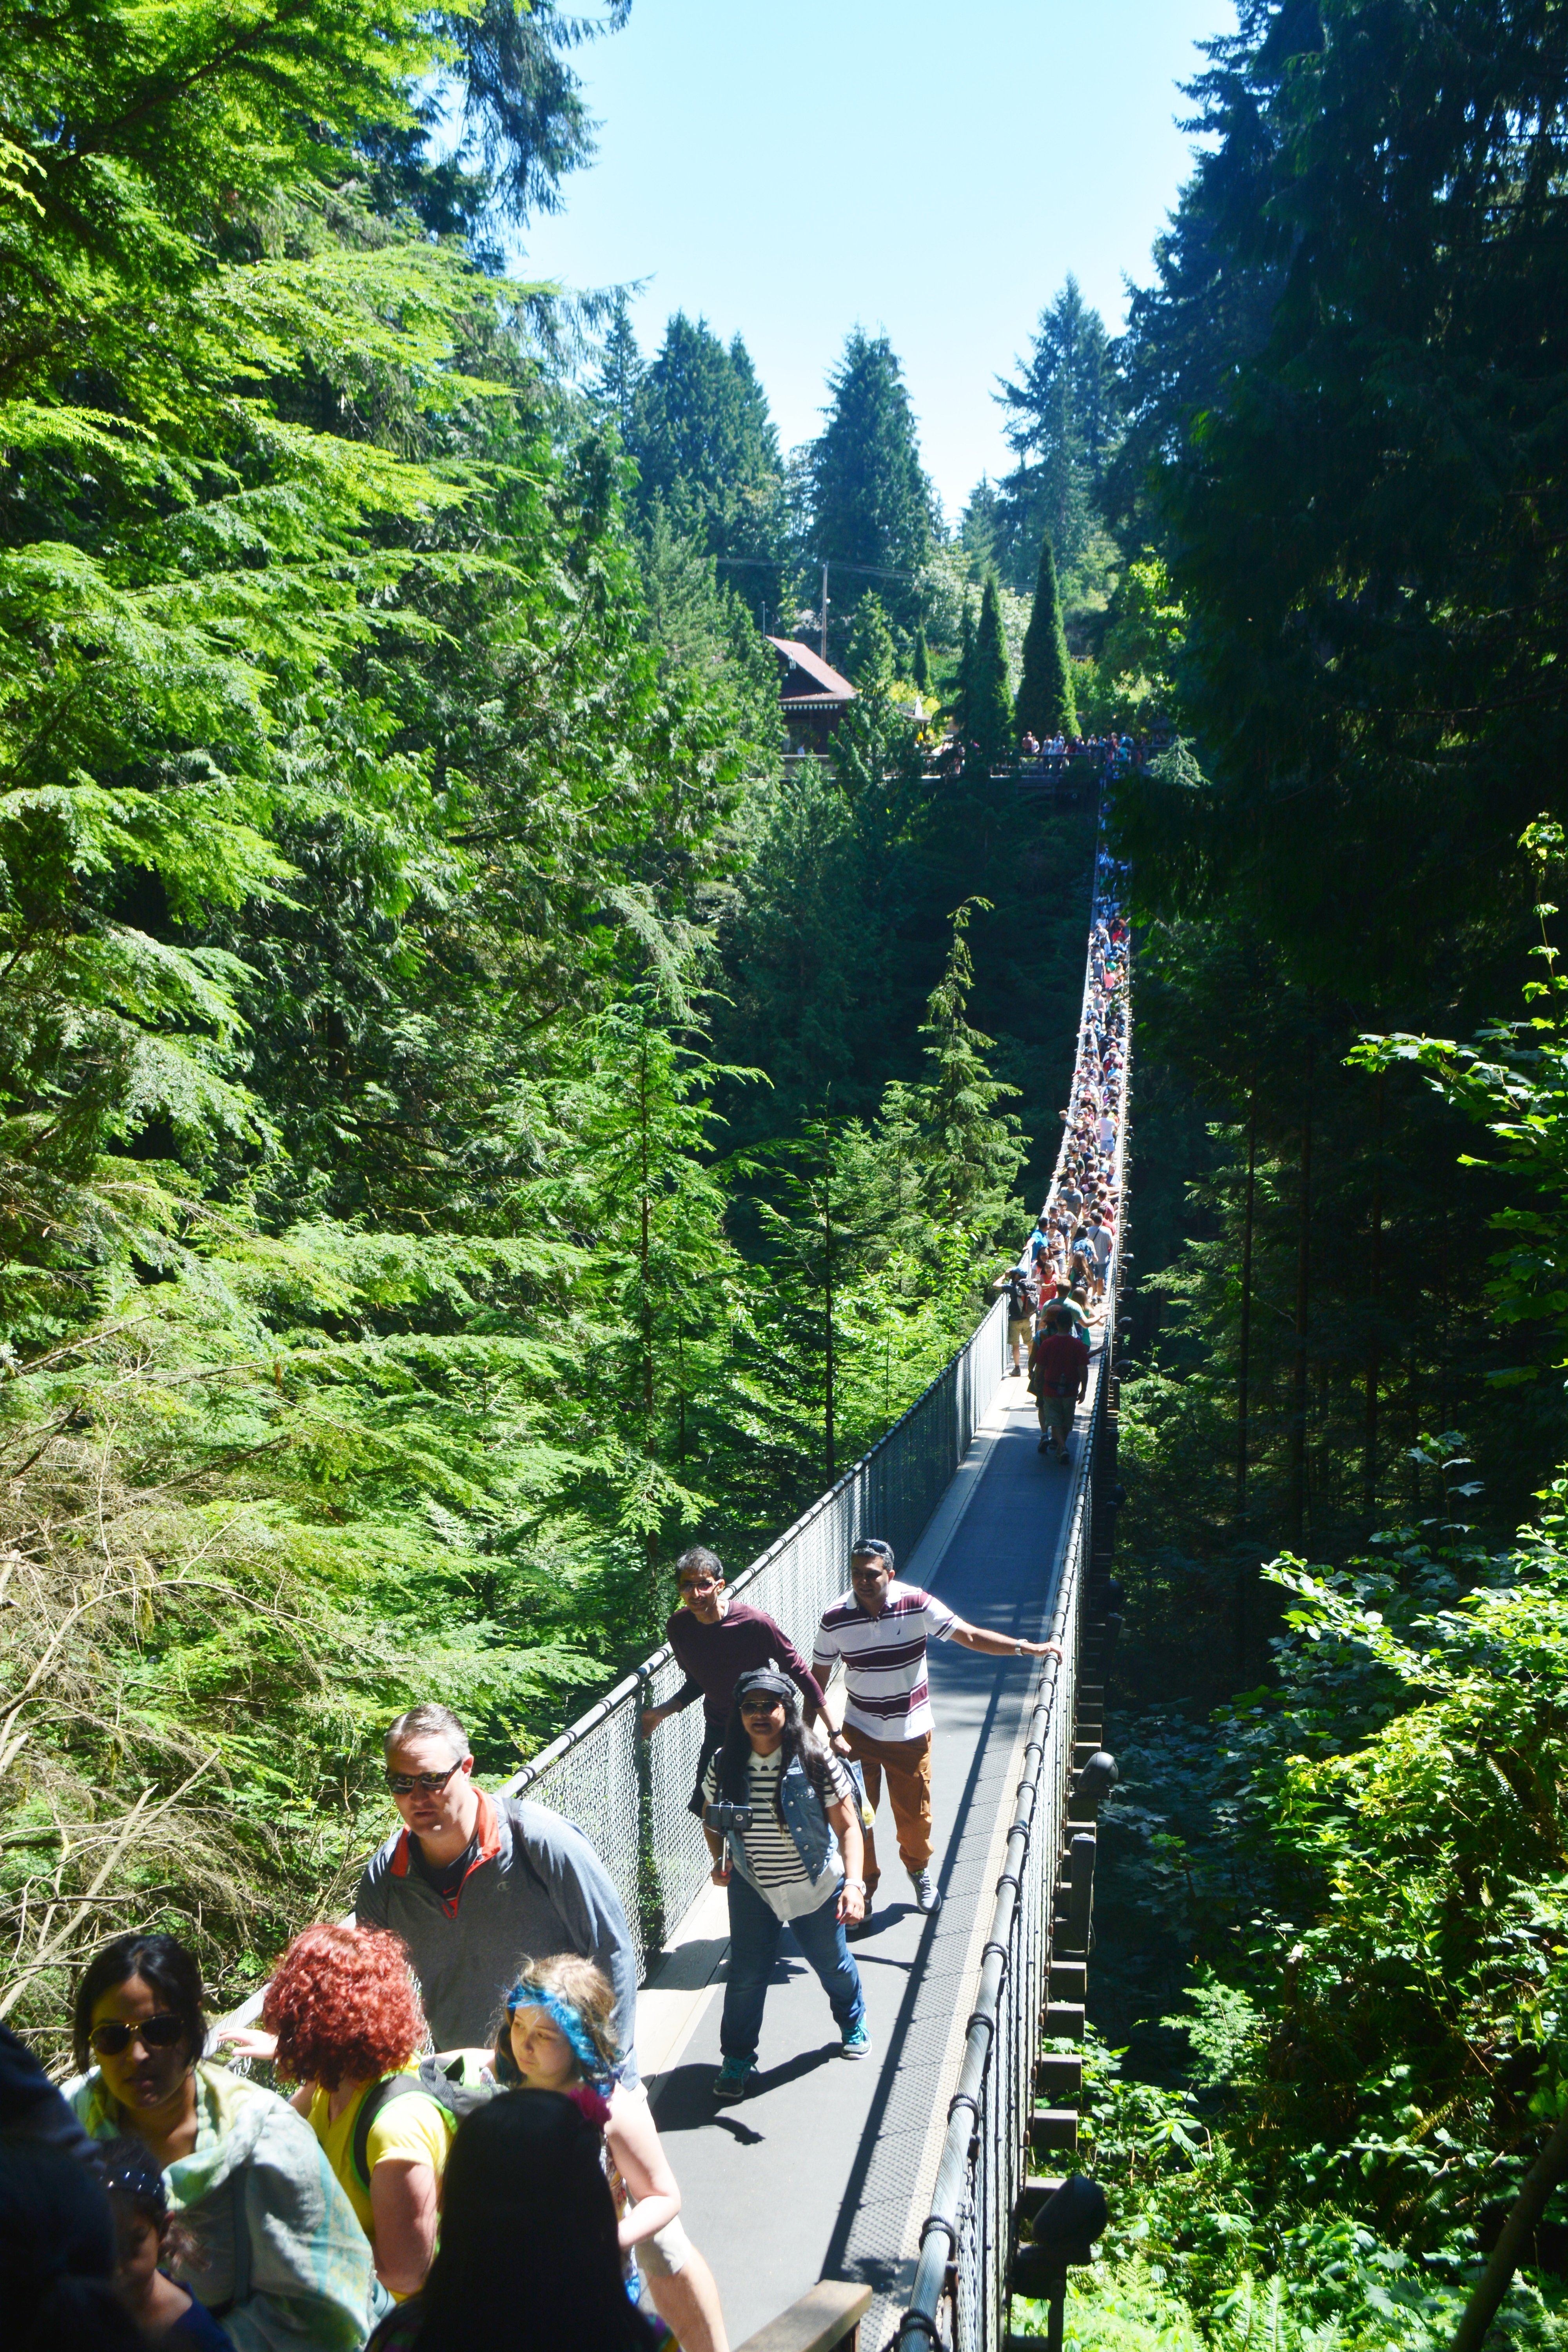 Capilano Suspension Bridge - Not to miss in Vancouver